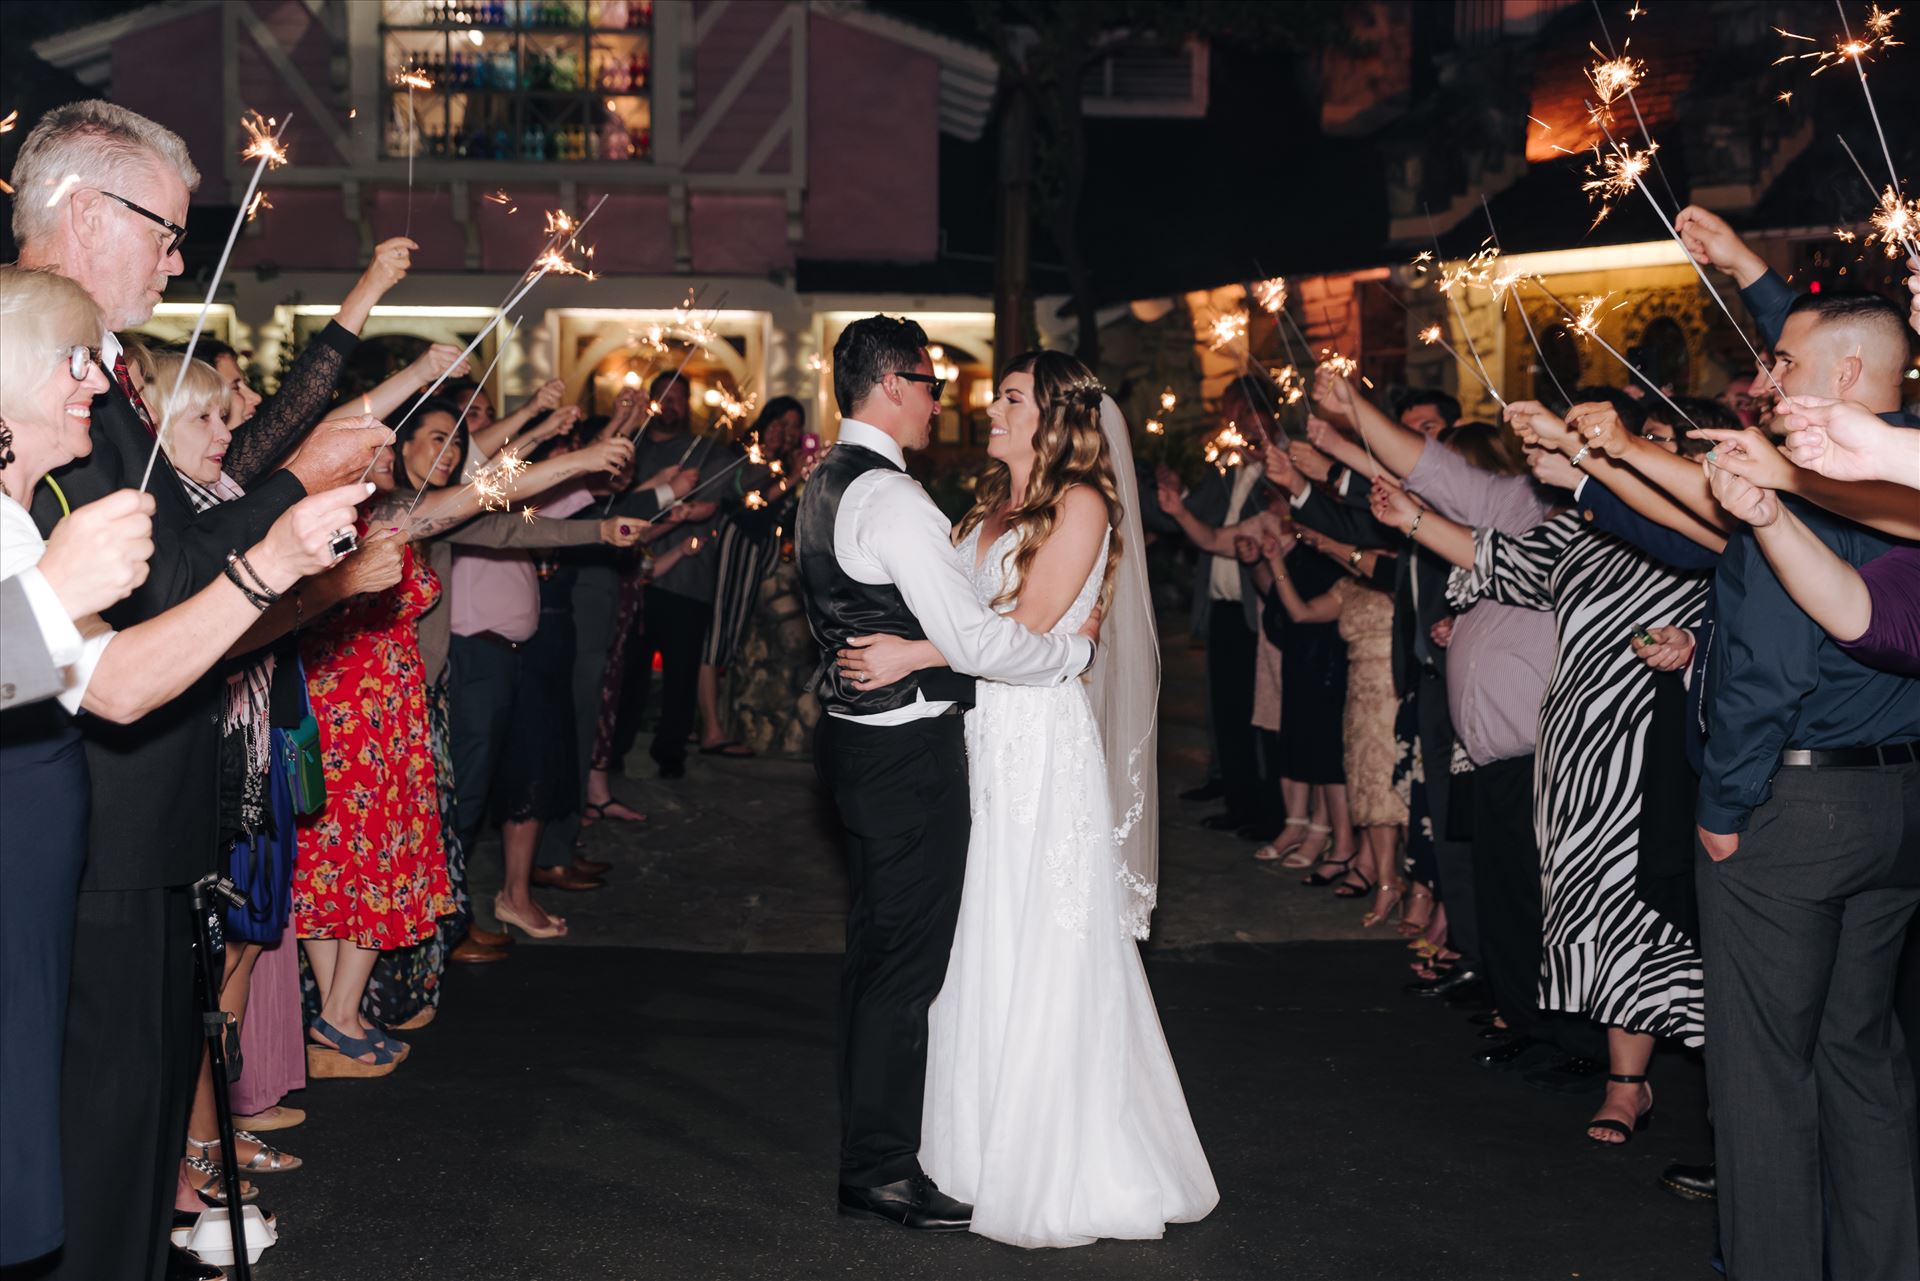 FW-8559.JPG Mirror's Edge Photography, a San Luis Obispo Wedding and Engagement Photographer, captures Rashel and Brian's Wedding Day at the Madonna Inn in San Luis Obispo. Sparkler exit. by Sarah Williams